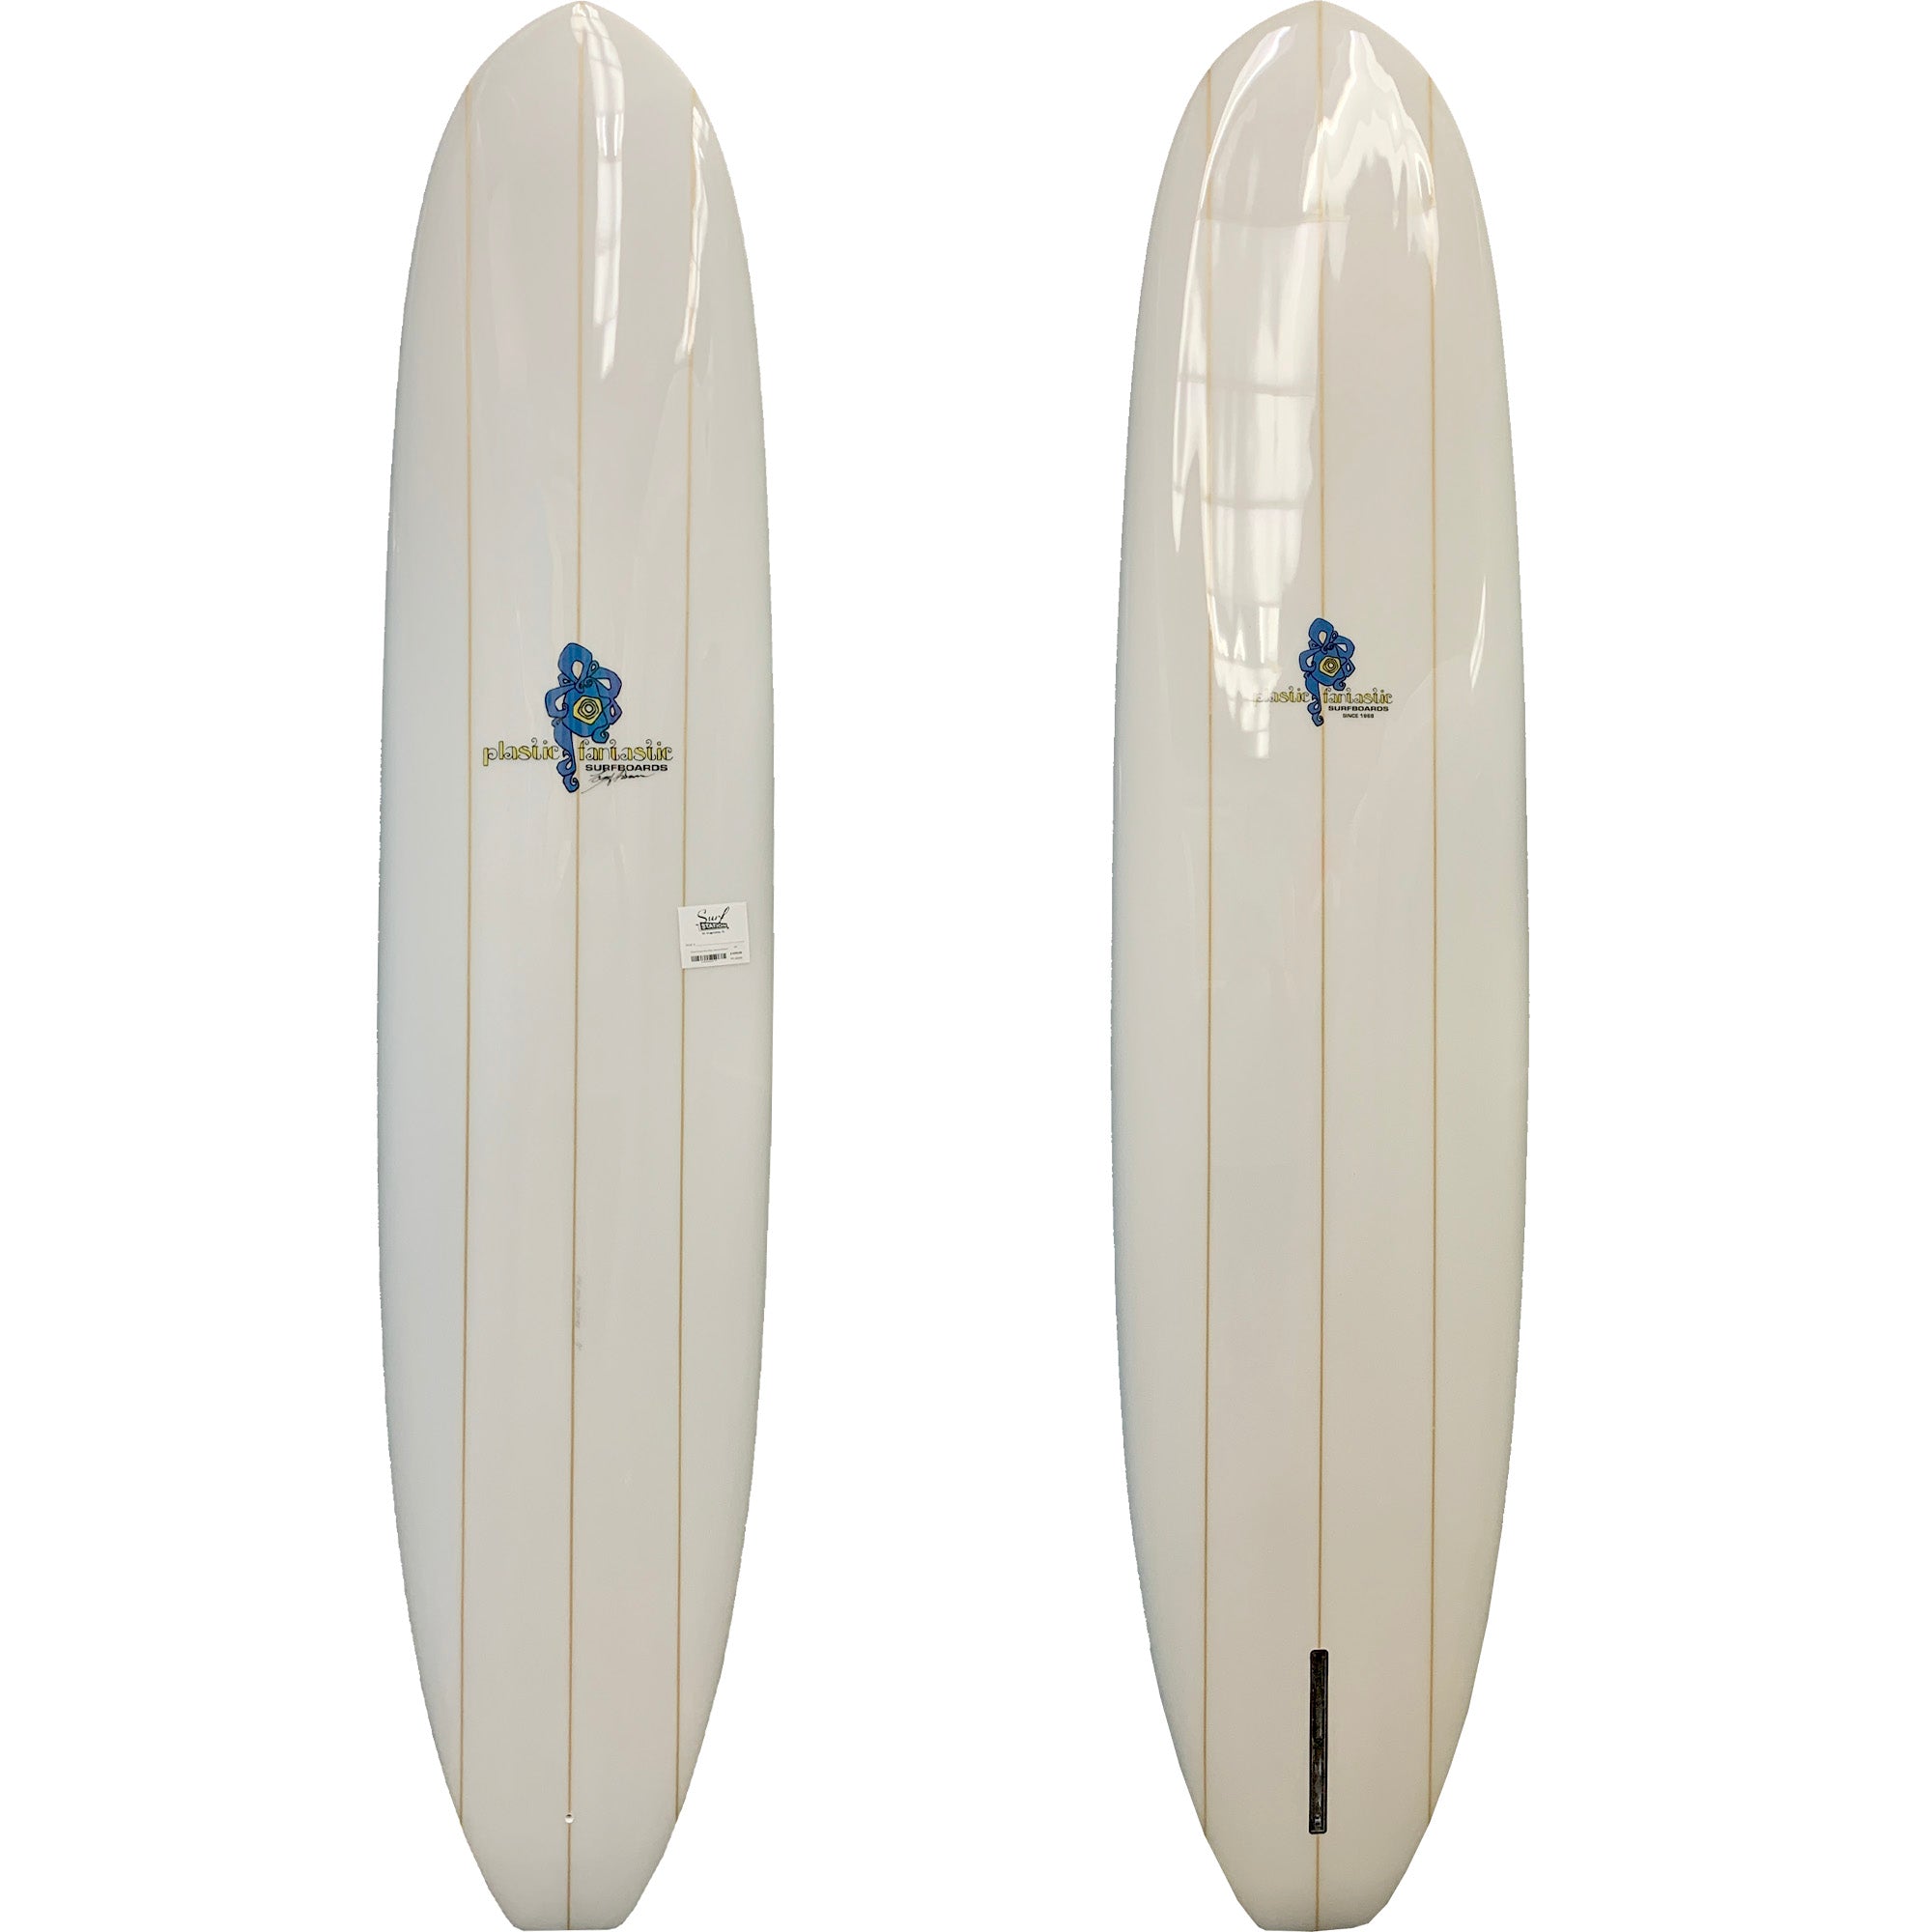 Plastic Fantastic Nose Rider Longboard Surfboard